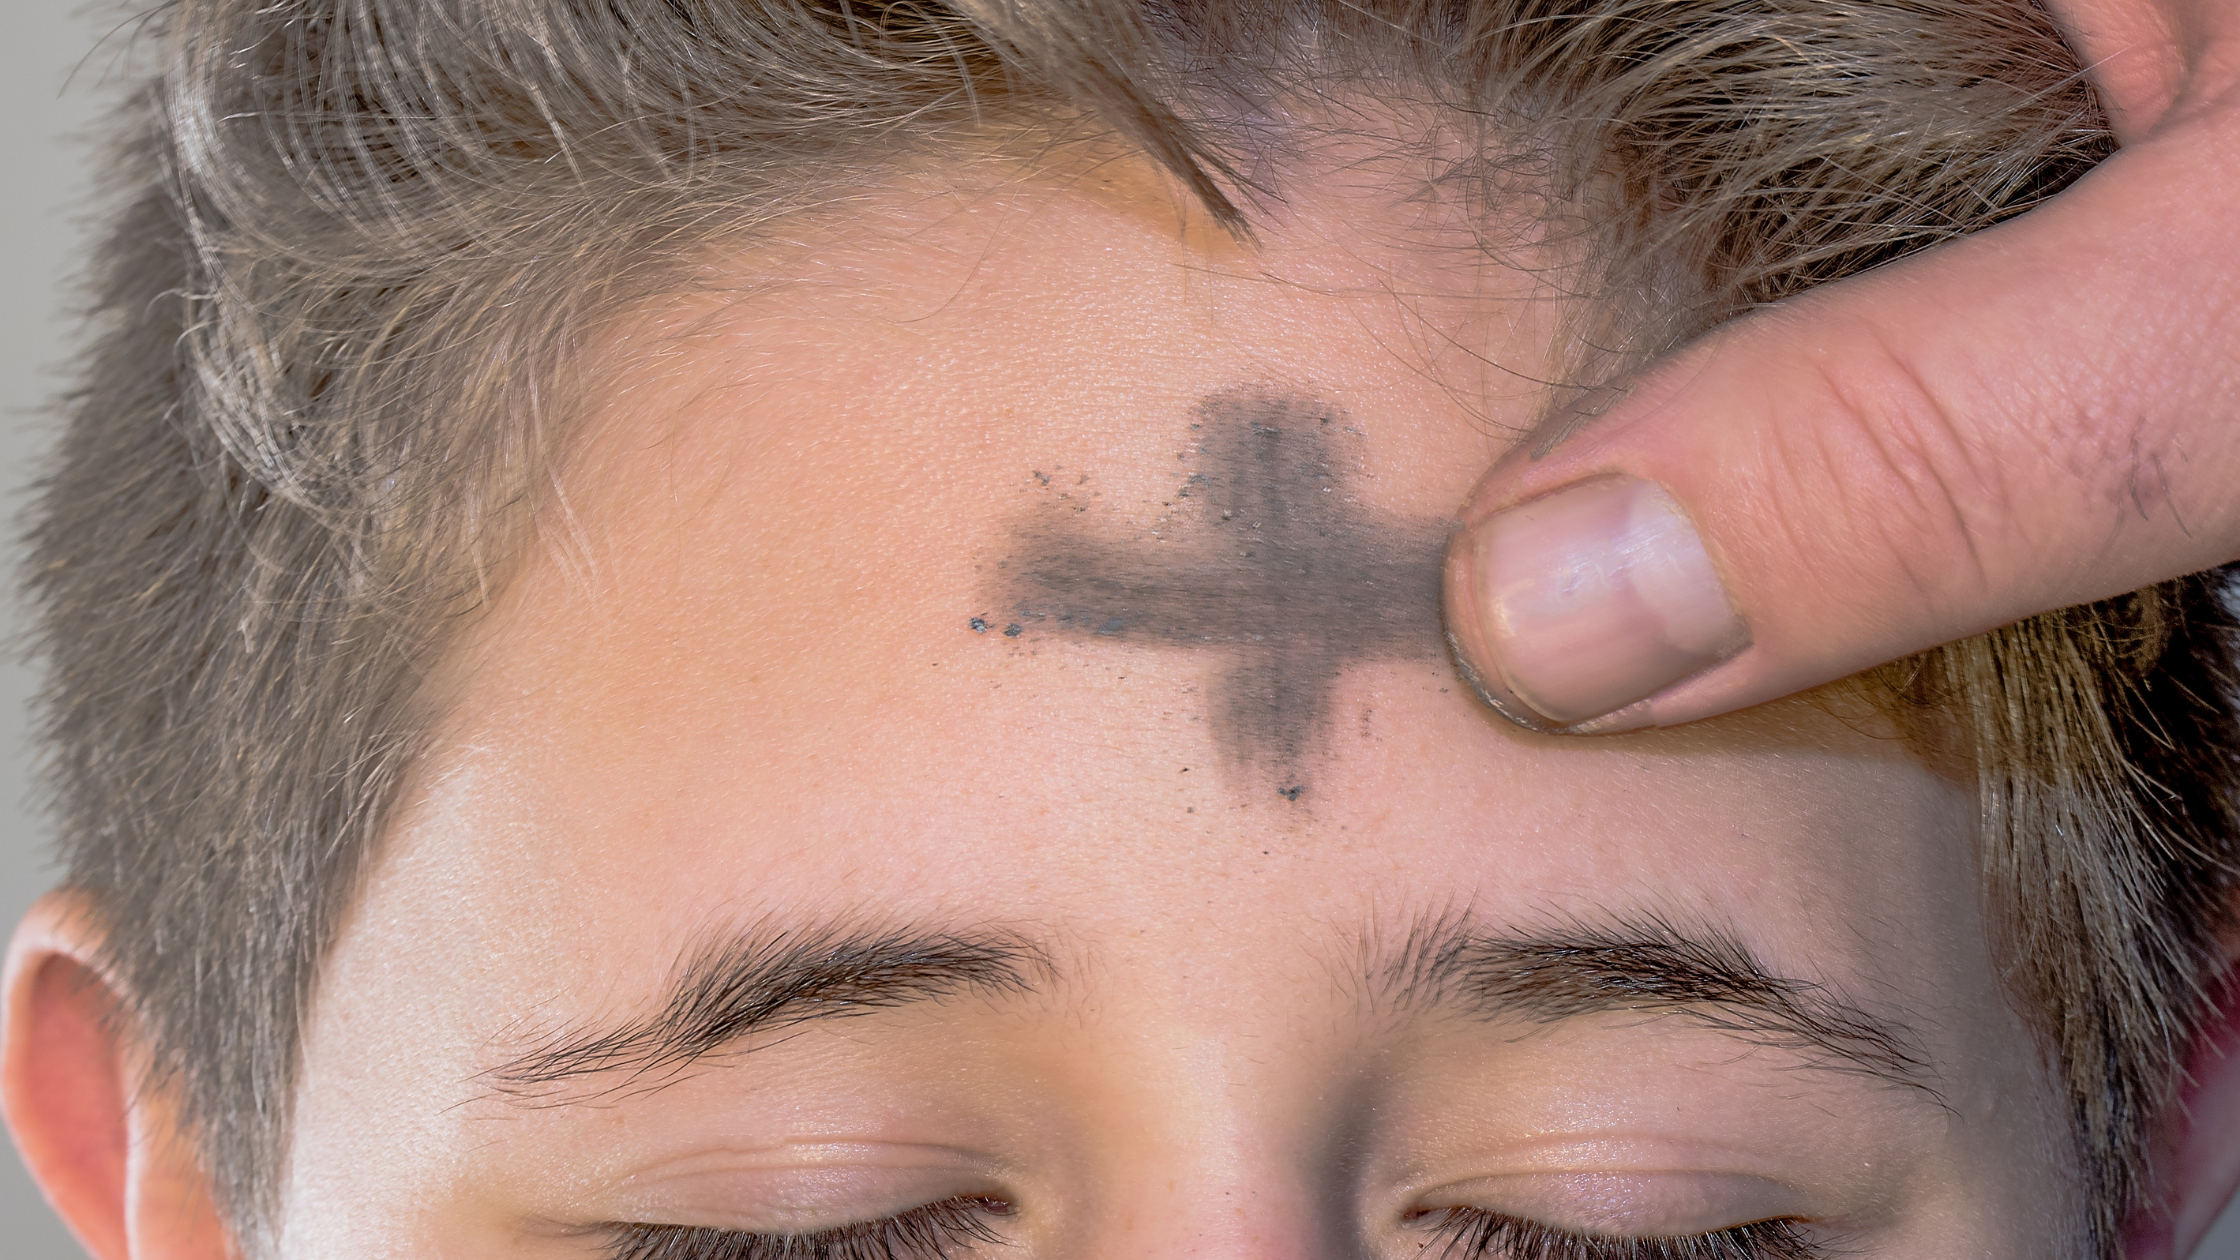 ash cross on forehead